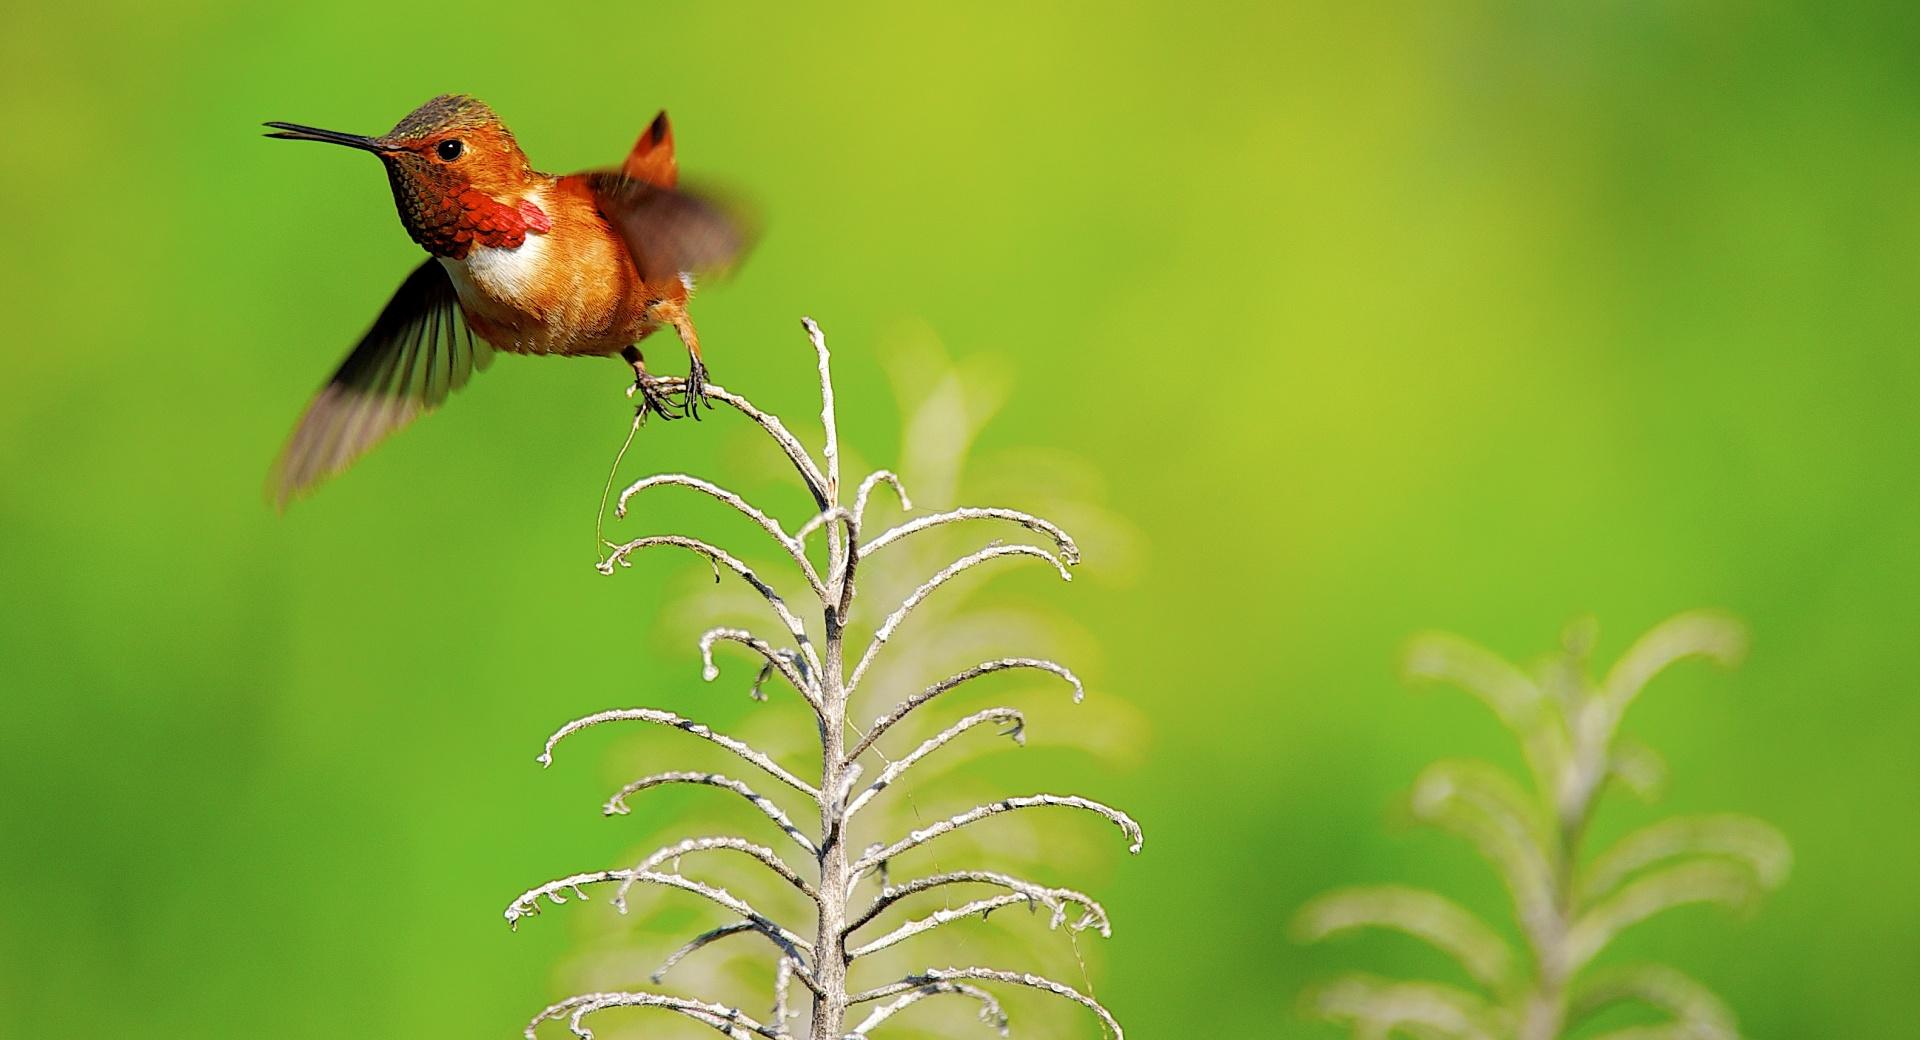 Rufous Hummingbird Male at 1024 x 1024 iPad size wallpapers HD quality